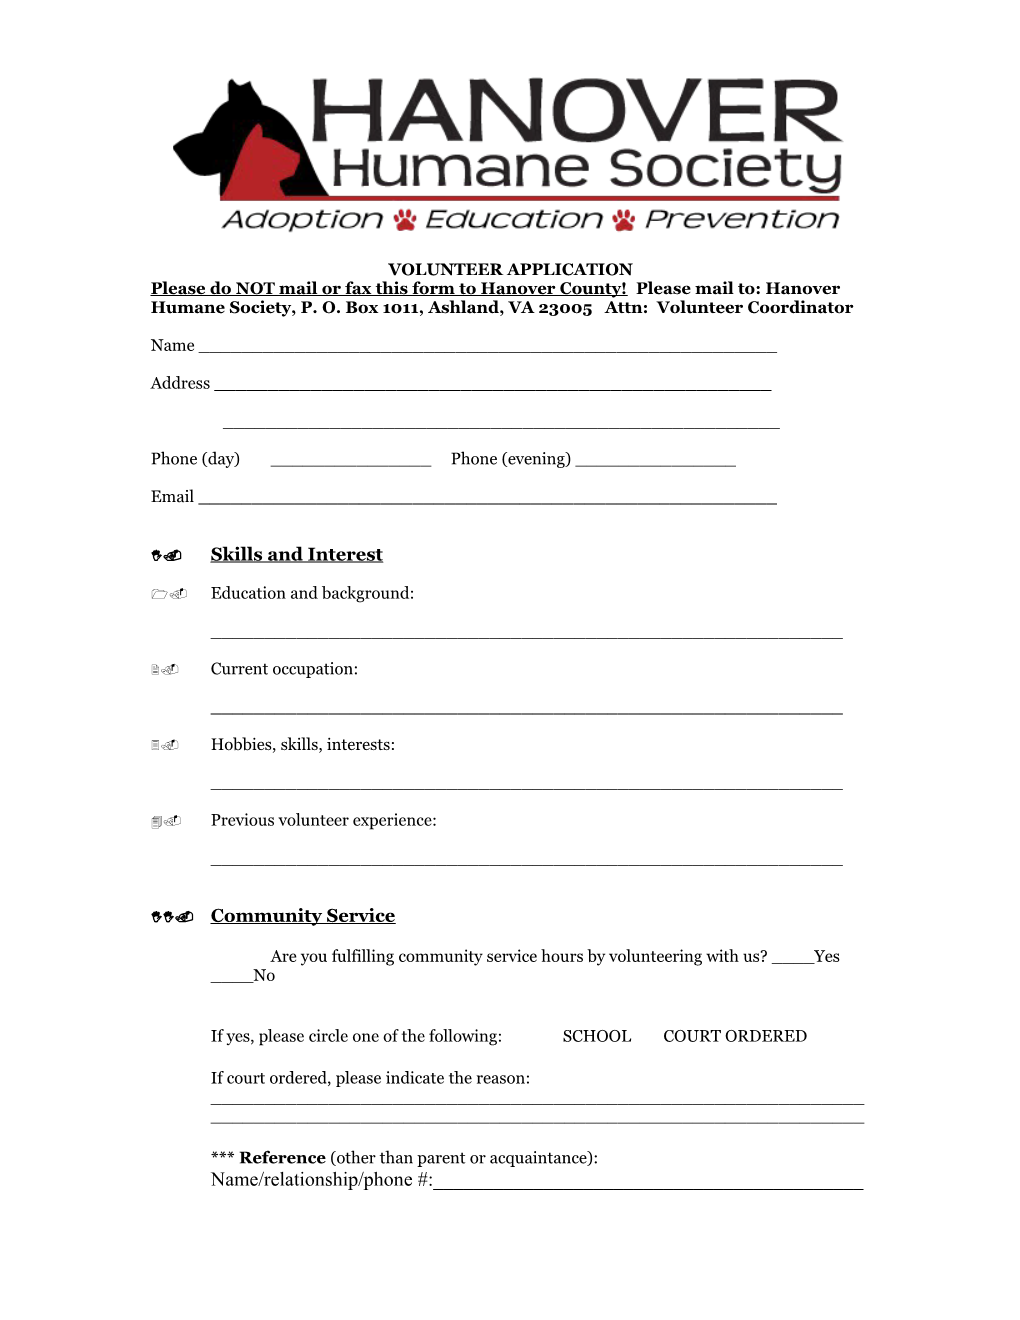 Hanover Humane Society Volunteer Addendum Application